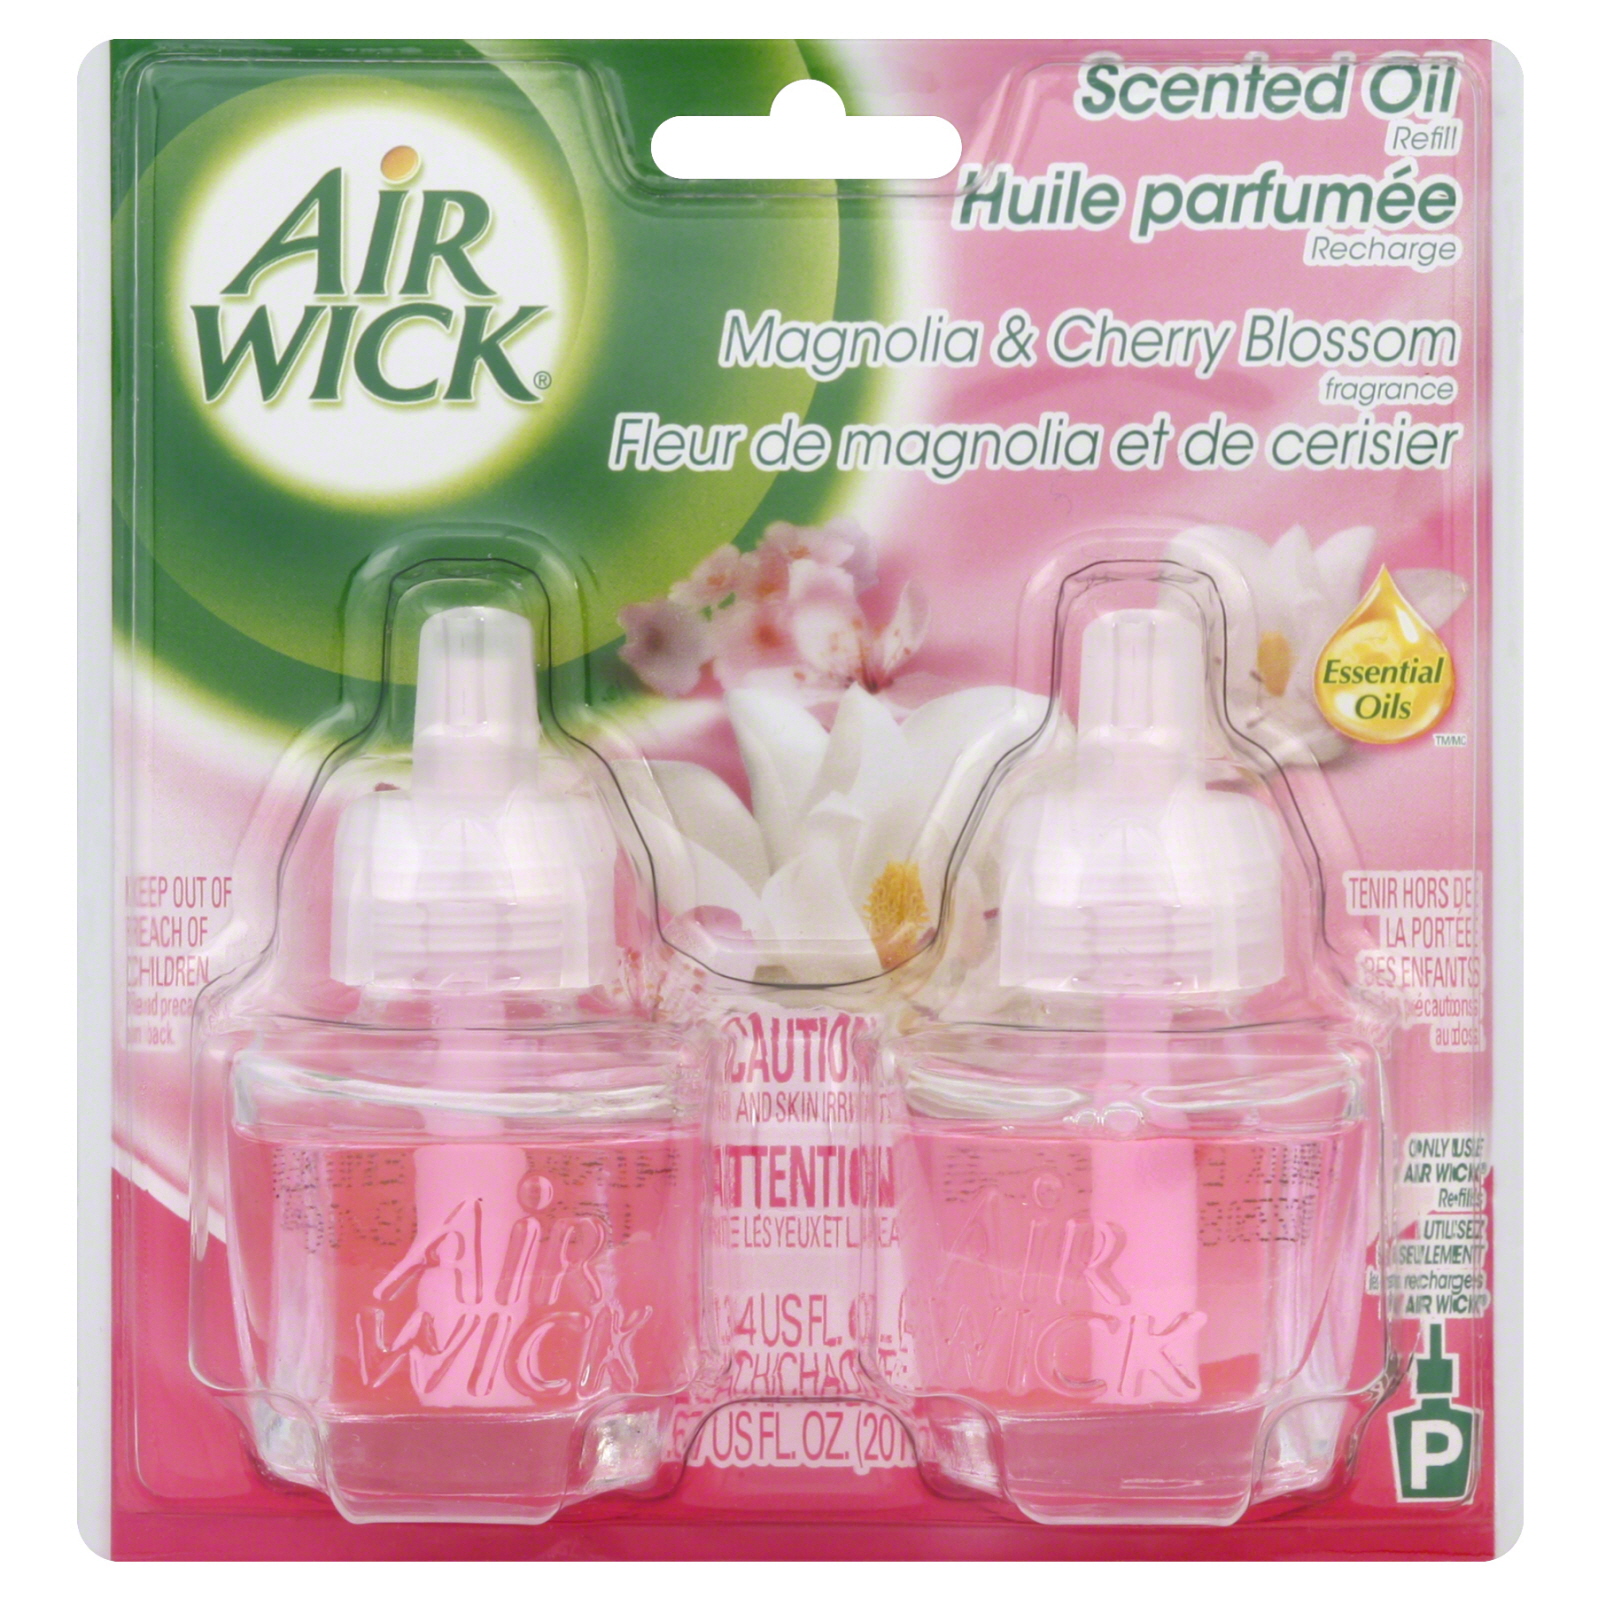 Airwick Scented Oil Refill, Essential Oils Magnolia & Cherry Blossom Fragrance, 2 - 0.67 fl oz (20 ml) refills [1.34 oz (40 ml)]